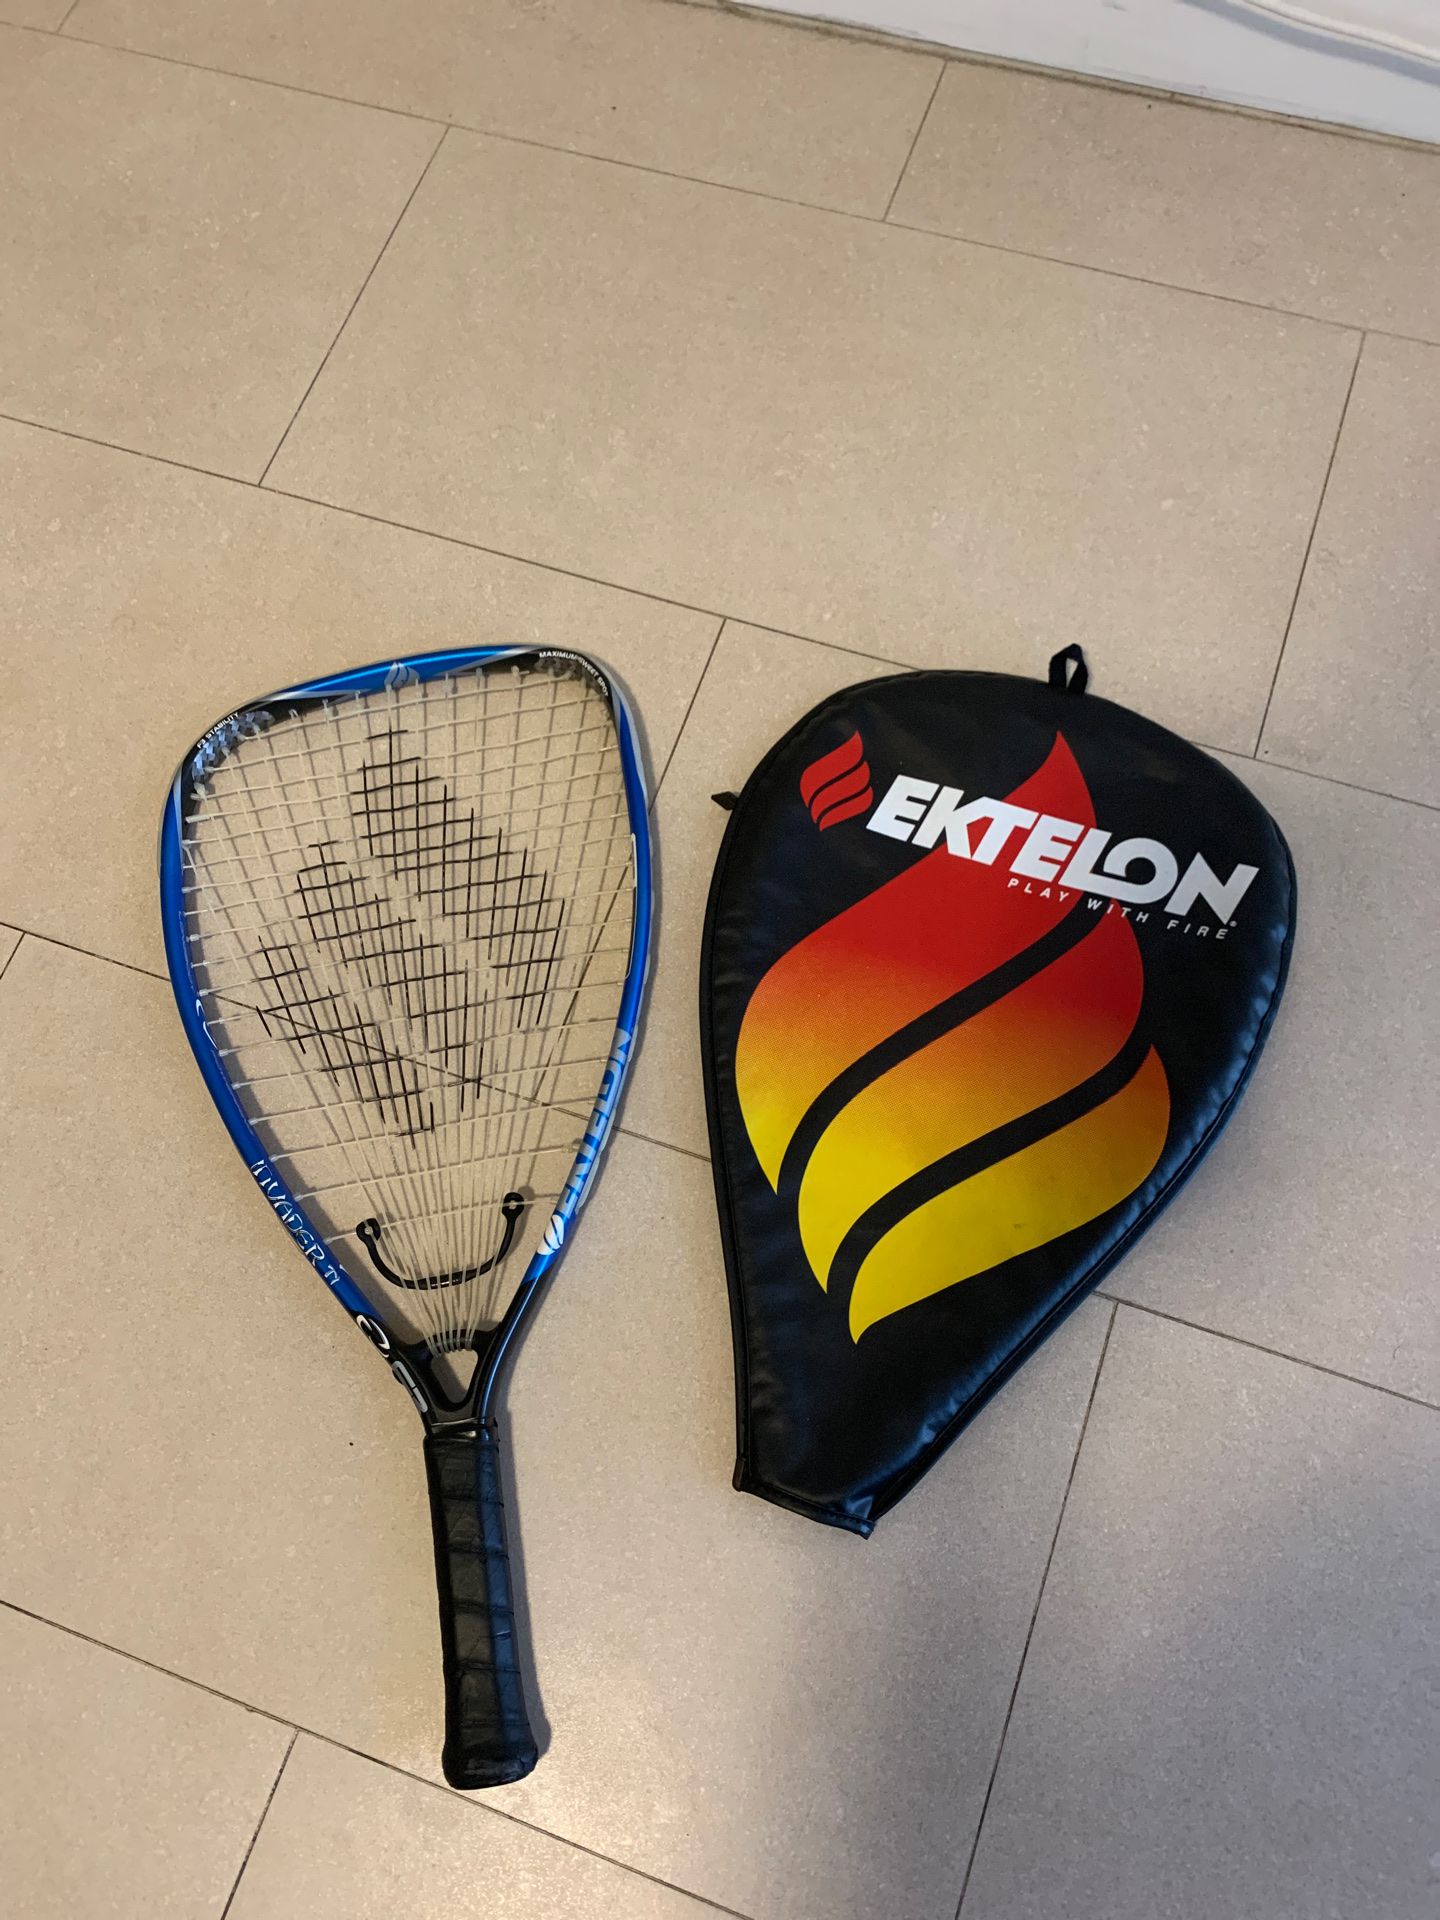 Ektelon Tennis Racket